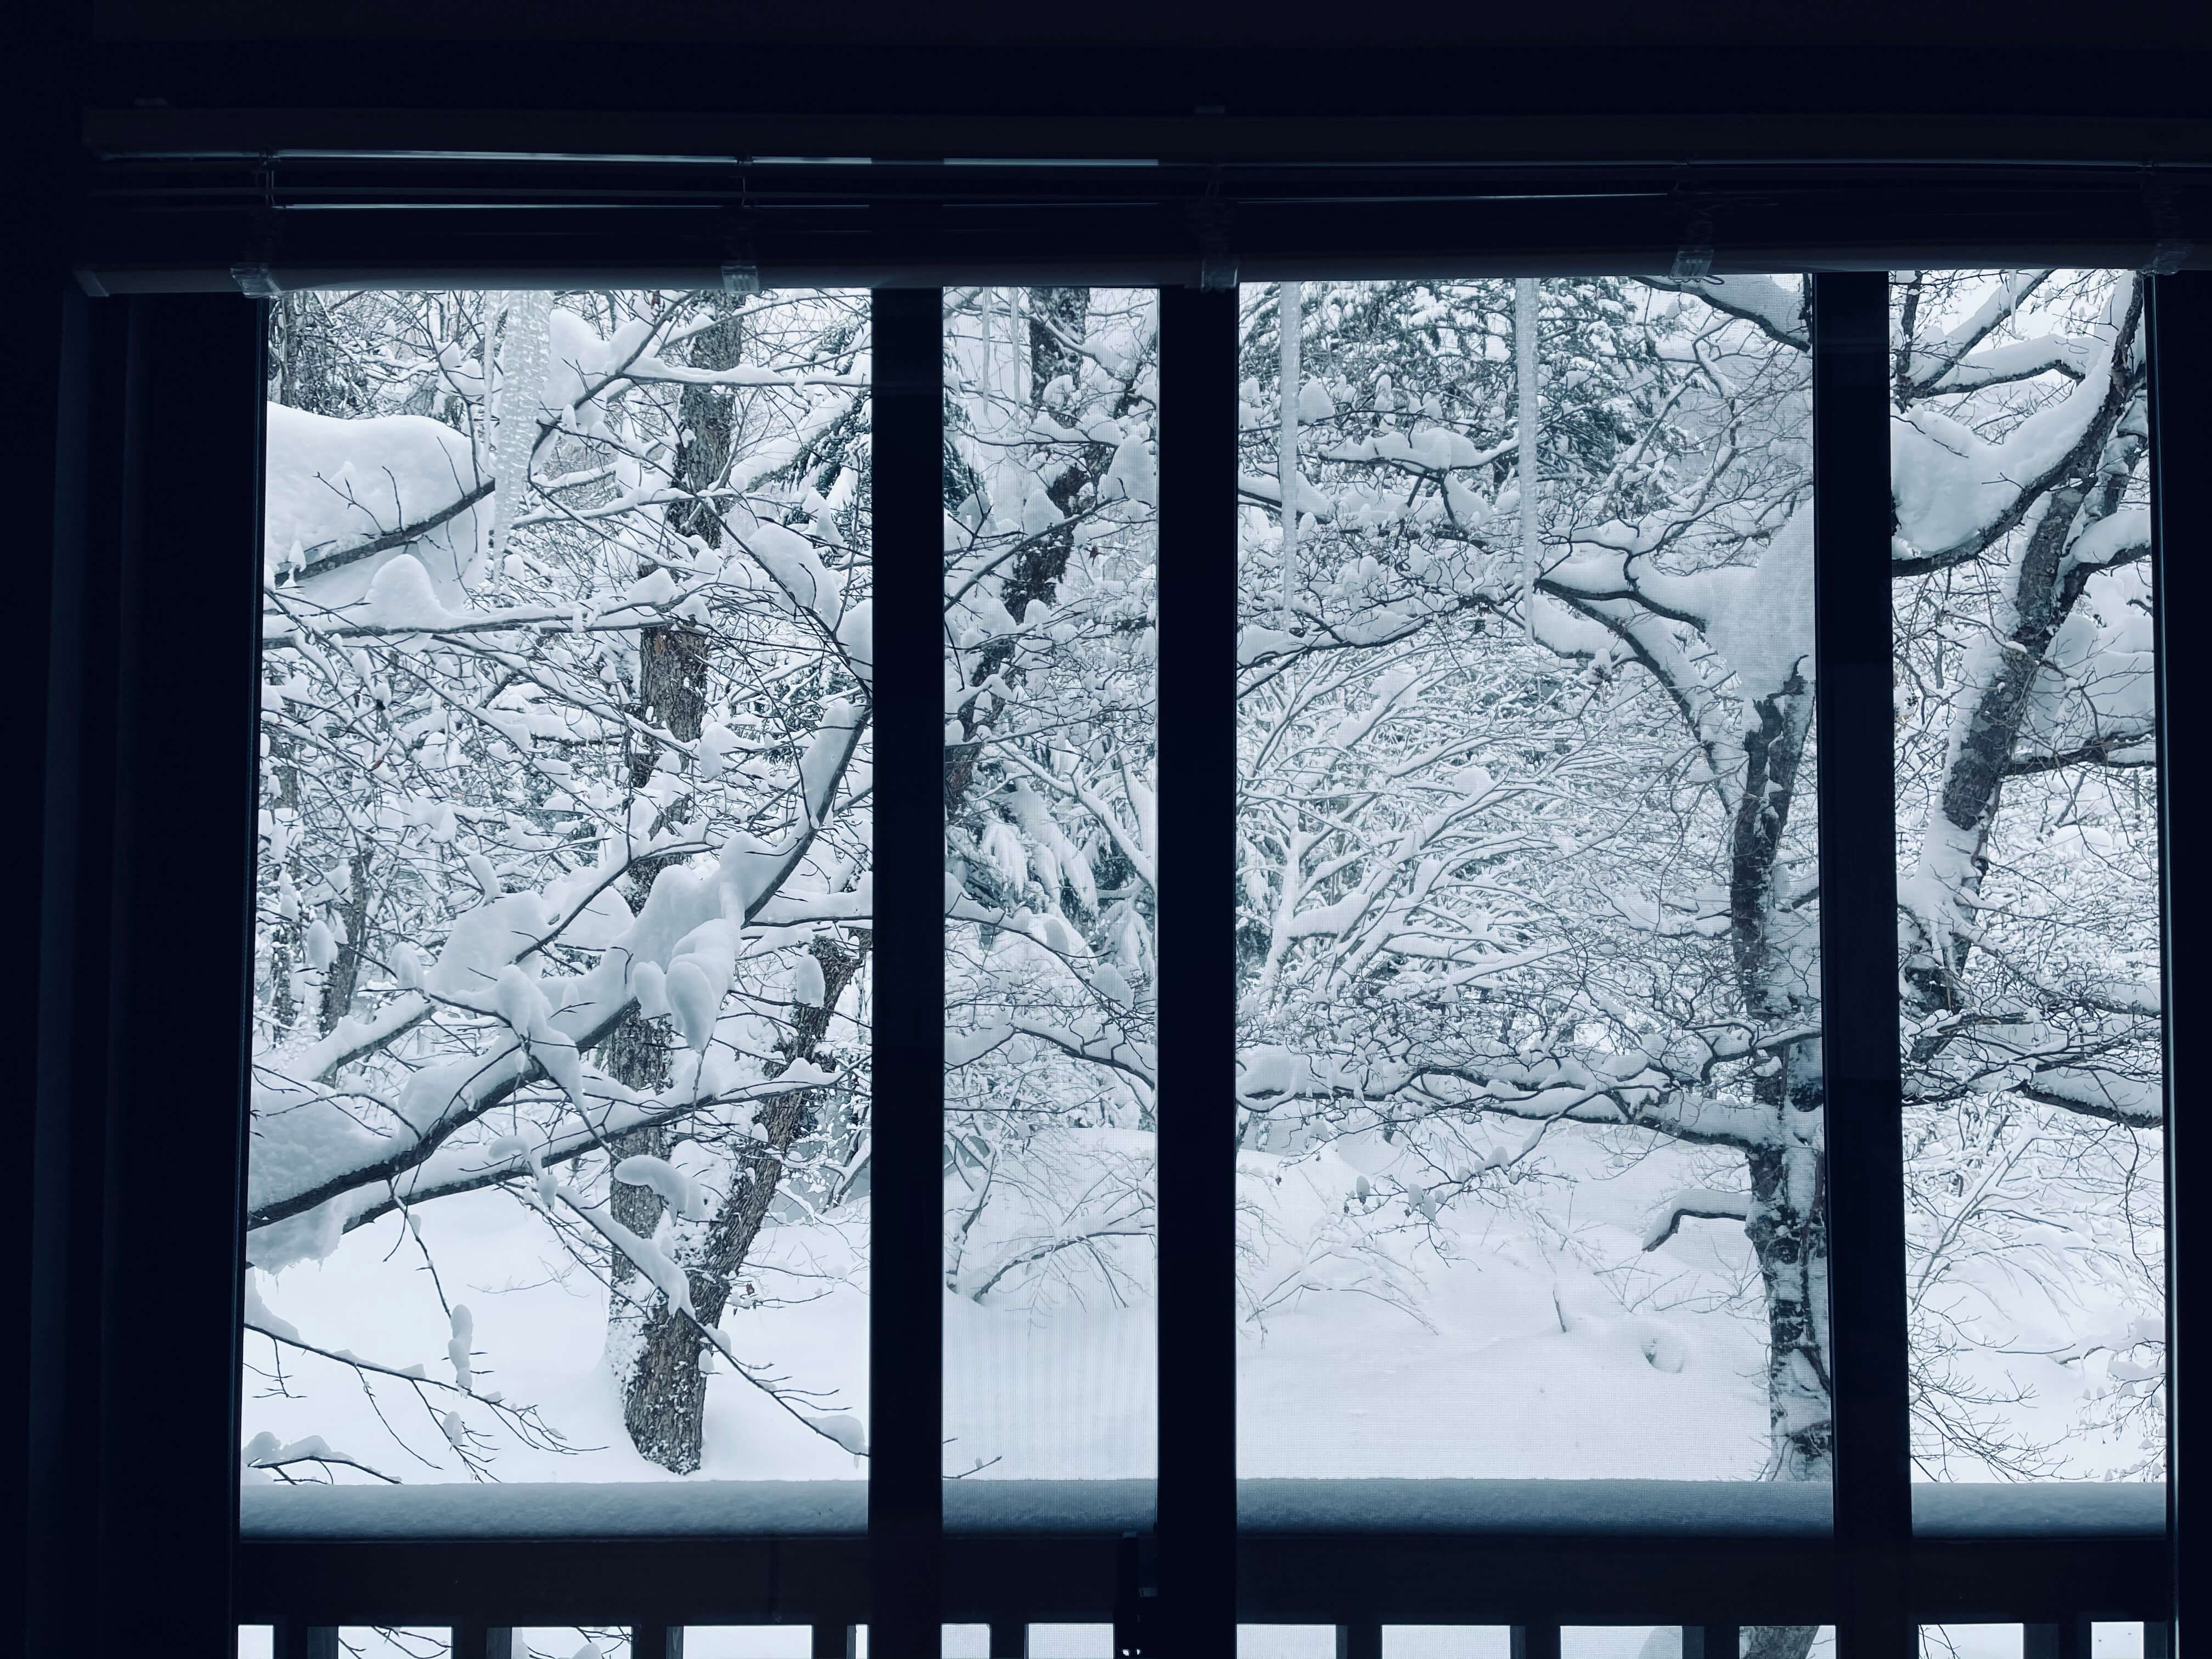 snowy window - apartment prepping